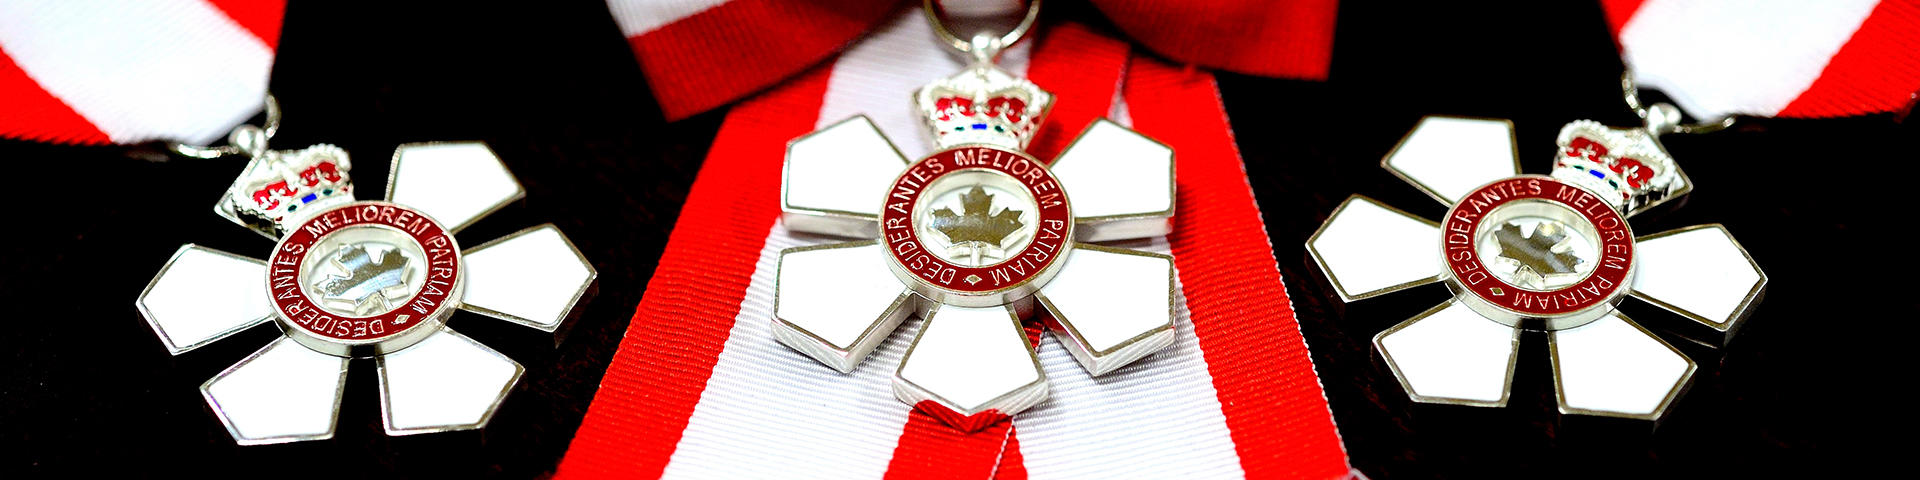 Ordre of Canada medal